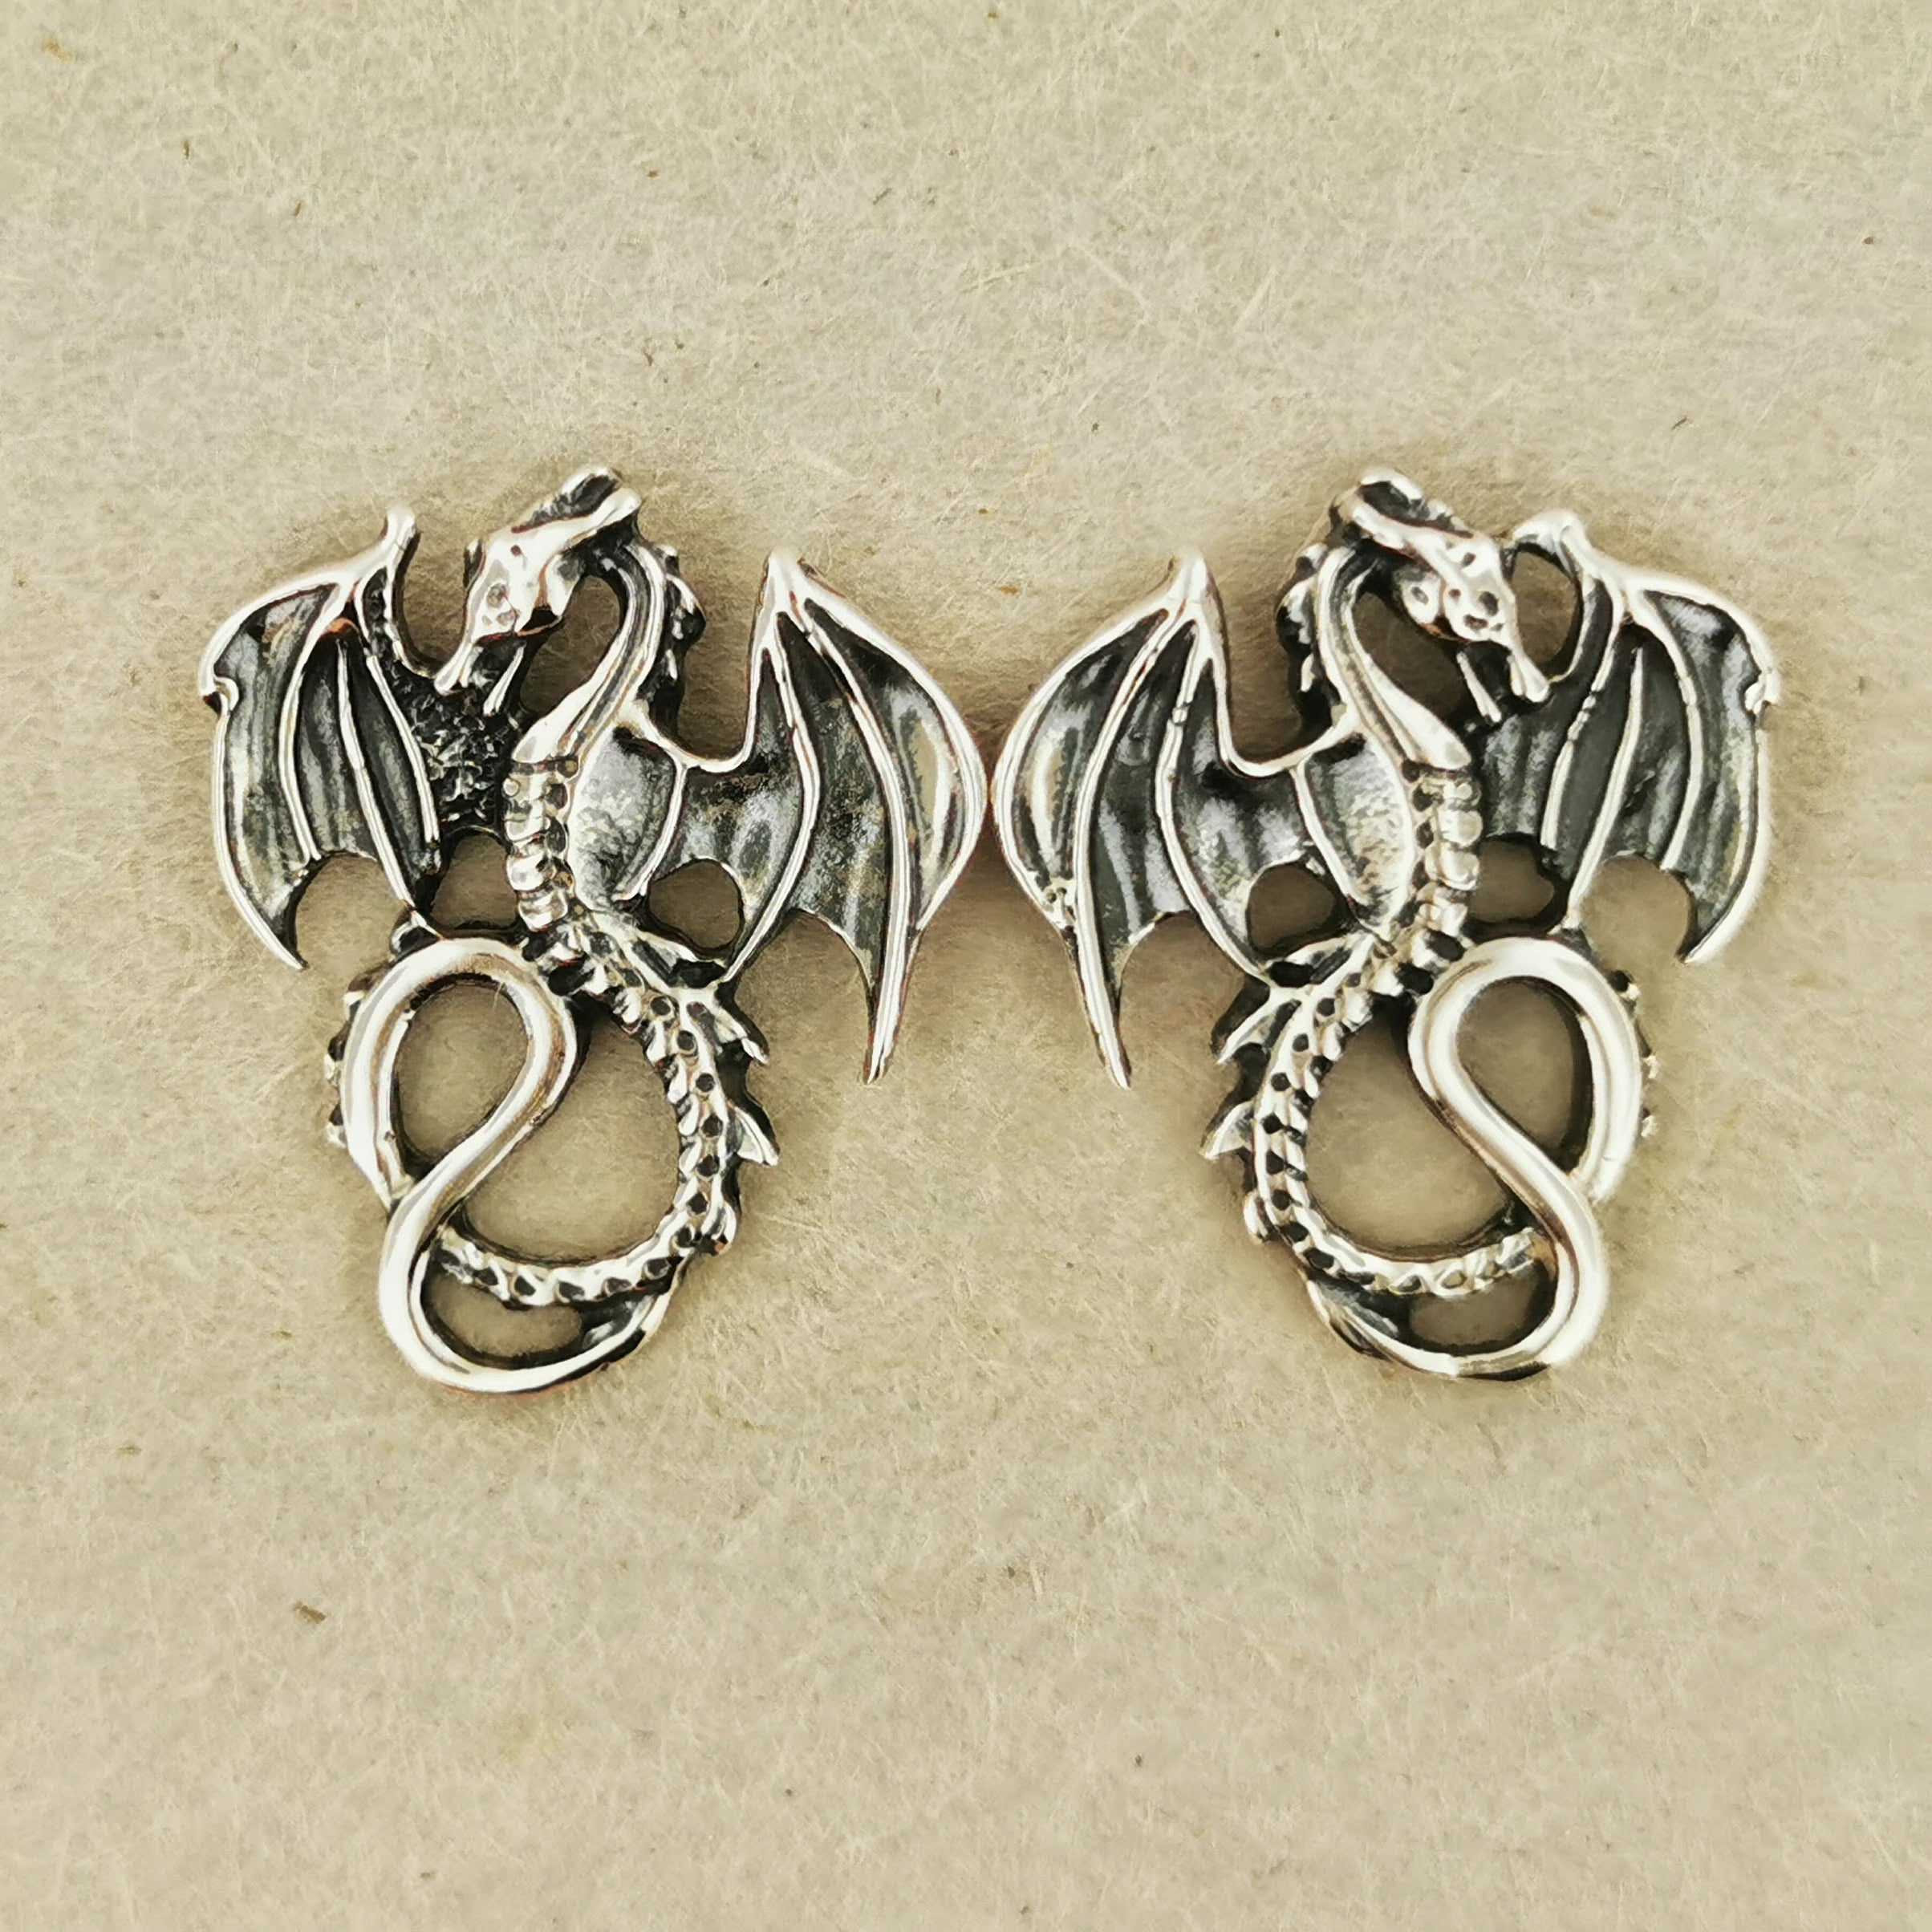 Stunning Handmade Solid Sterling Silver Organic Form Nugget Stud Earrings